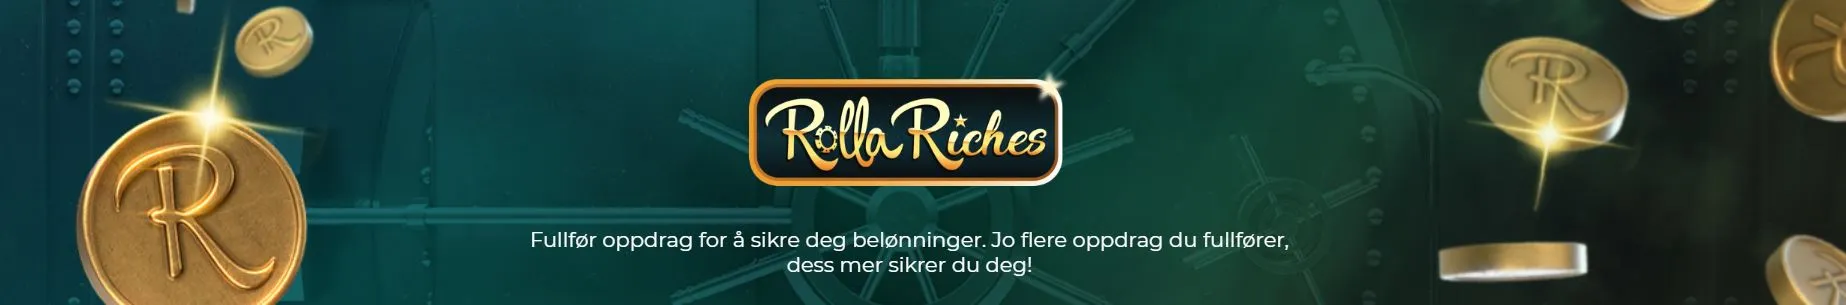 rolla riches